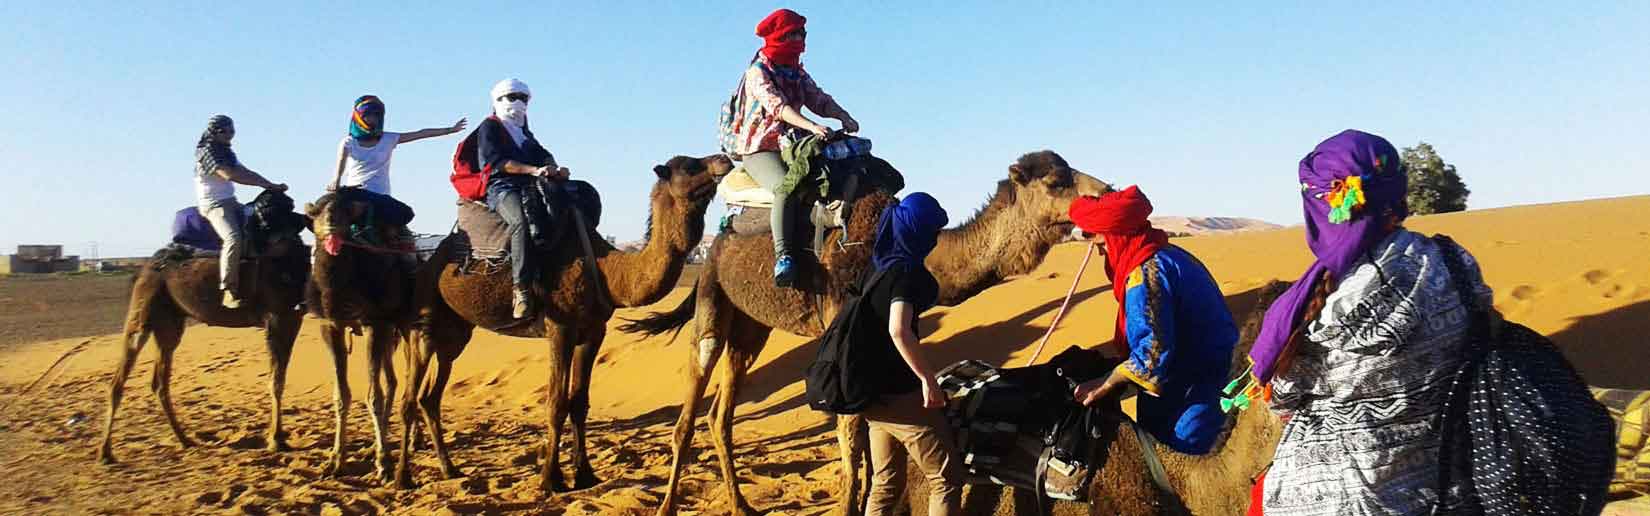 Desierto de Marruecos viaje desde Marrakech o desde Fez 